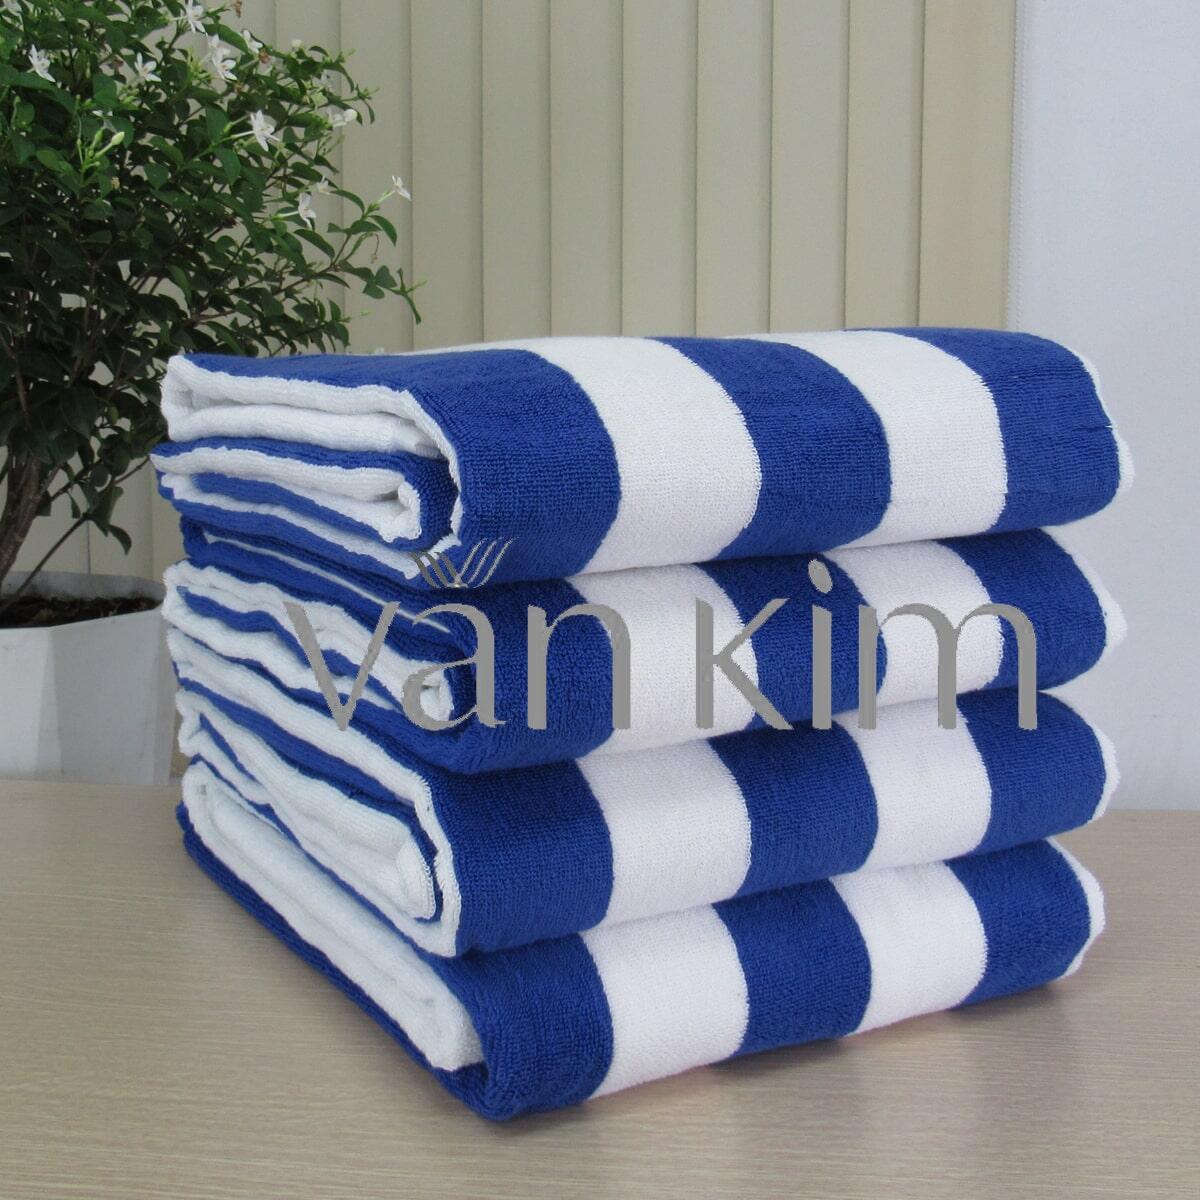 Hotel Bath Towel - Economy 90x180 900g White